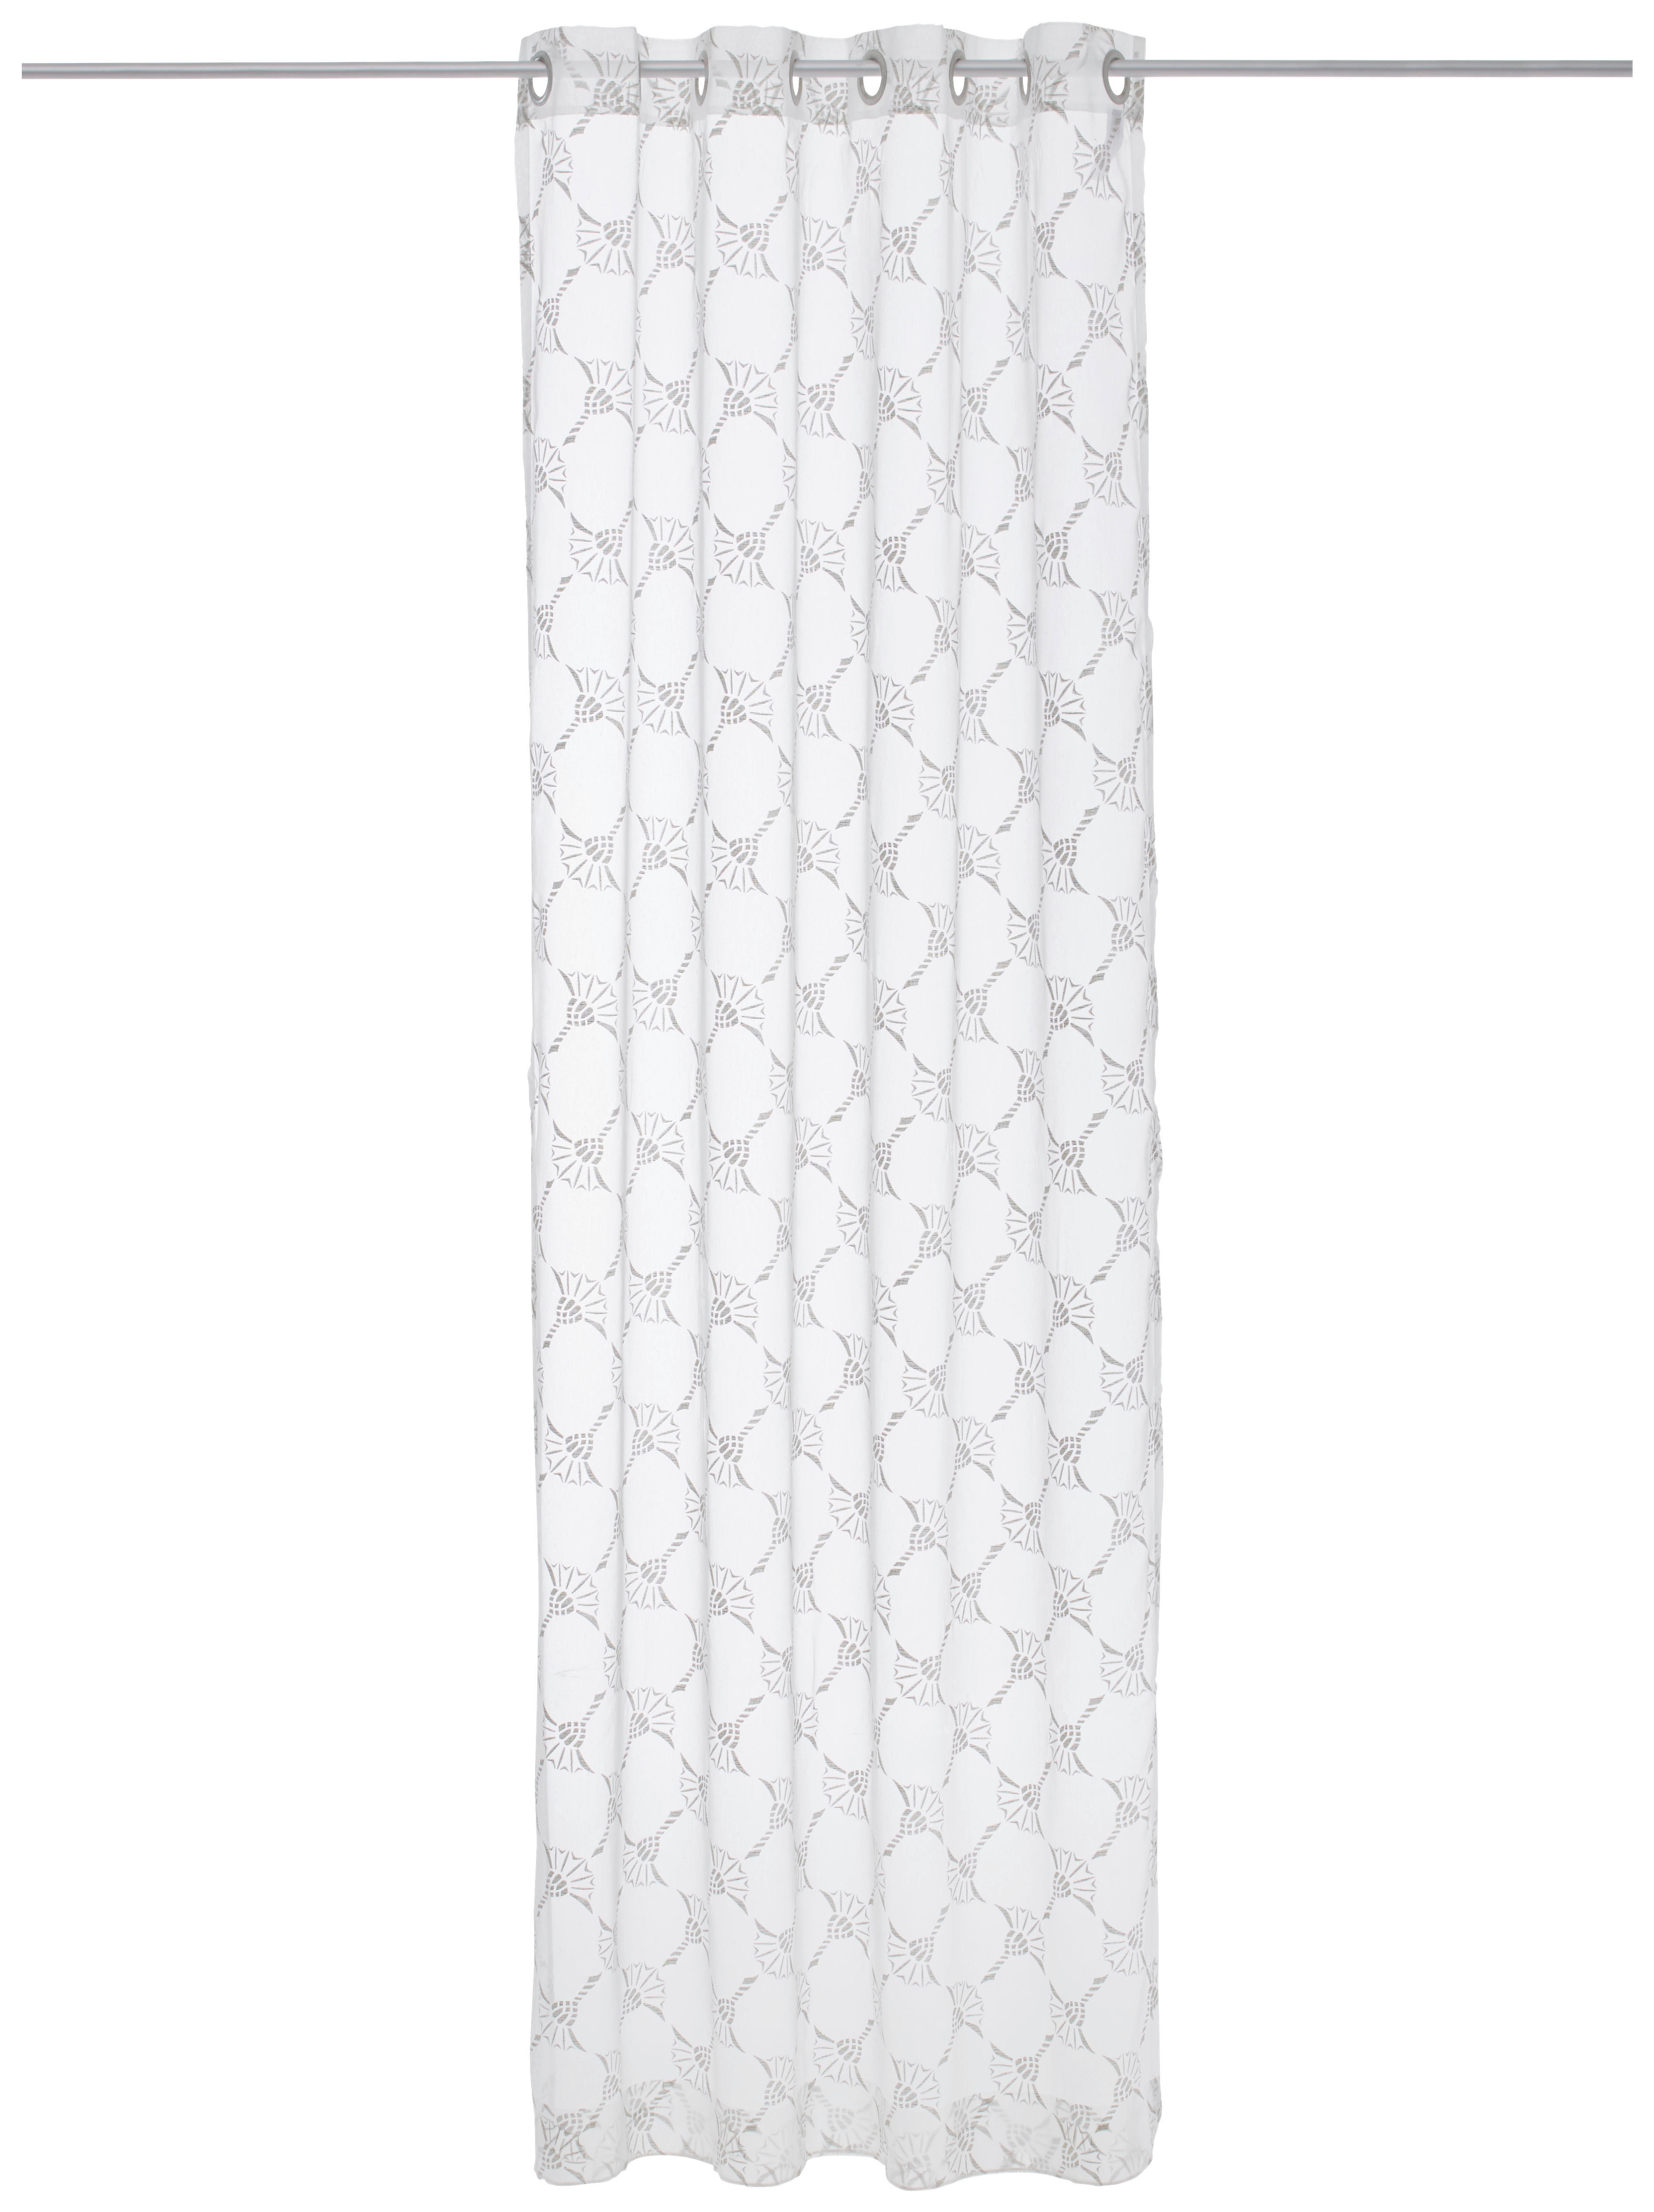 ÖSENSCHAL J-Airy transparent 140/250 cm   - Creme/Naturfarben, Design, Textil (140/250cm) - Joop!